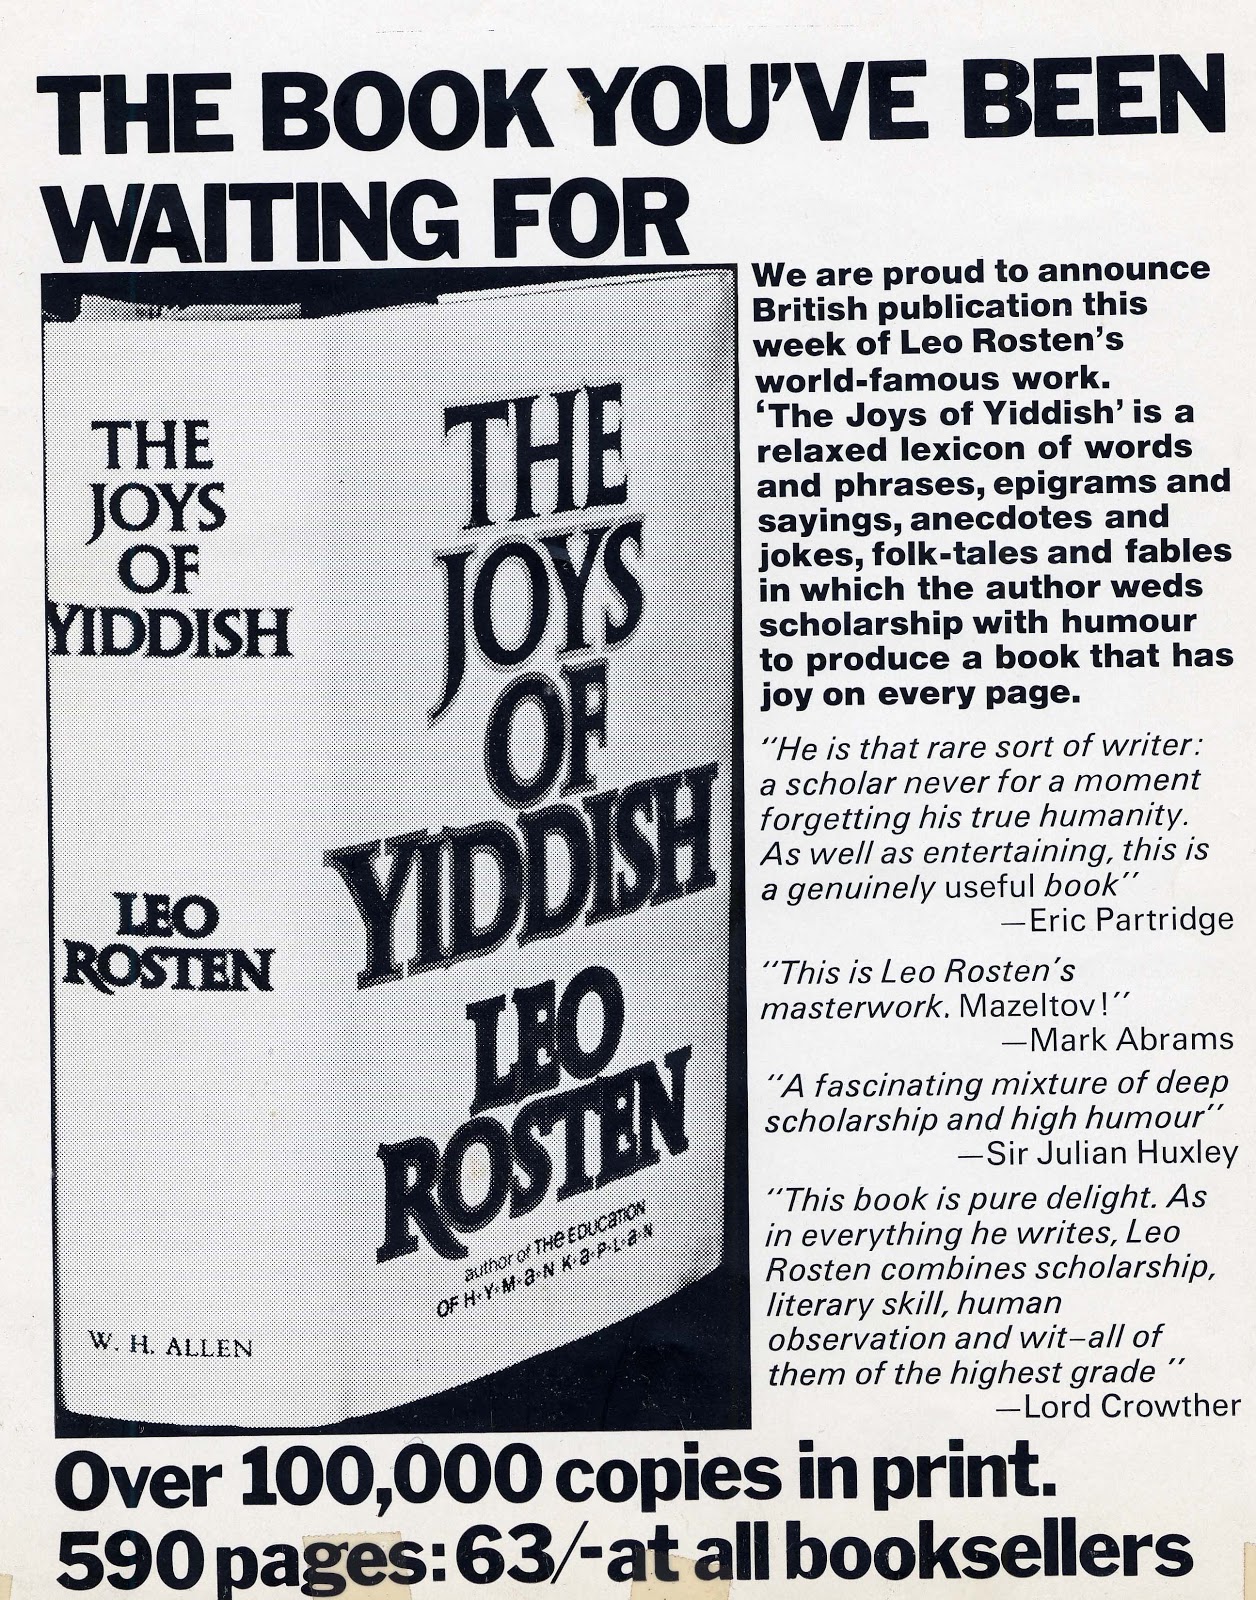 Ad for Leo Rosten's "The Joys of Yiddish"